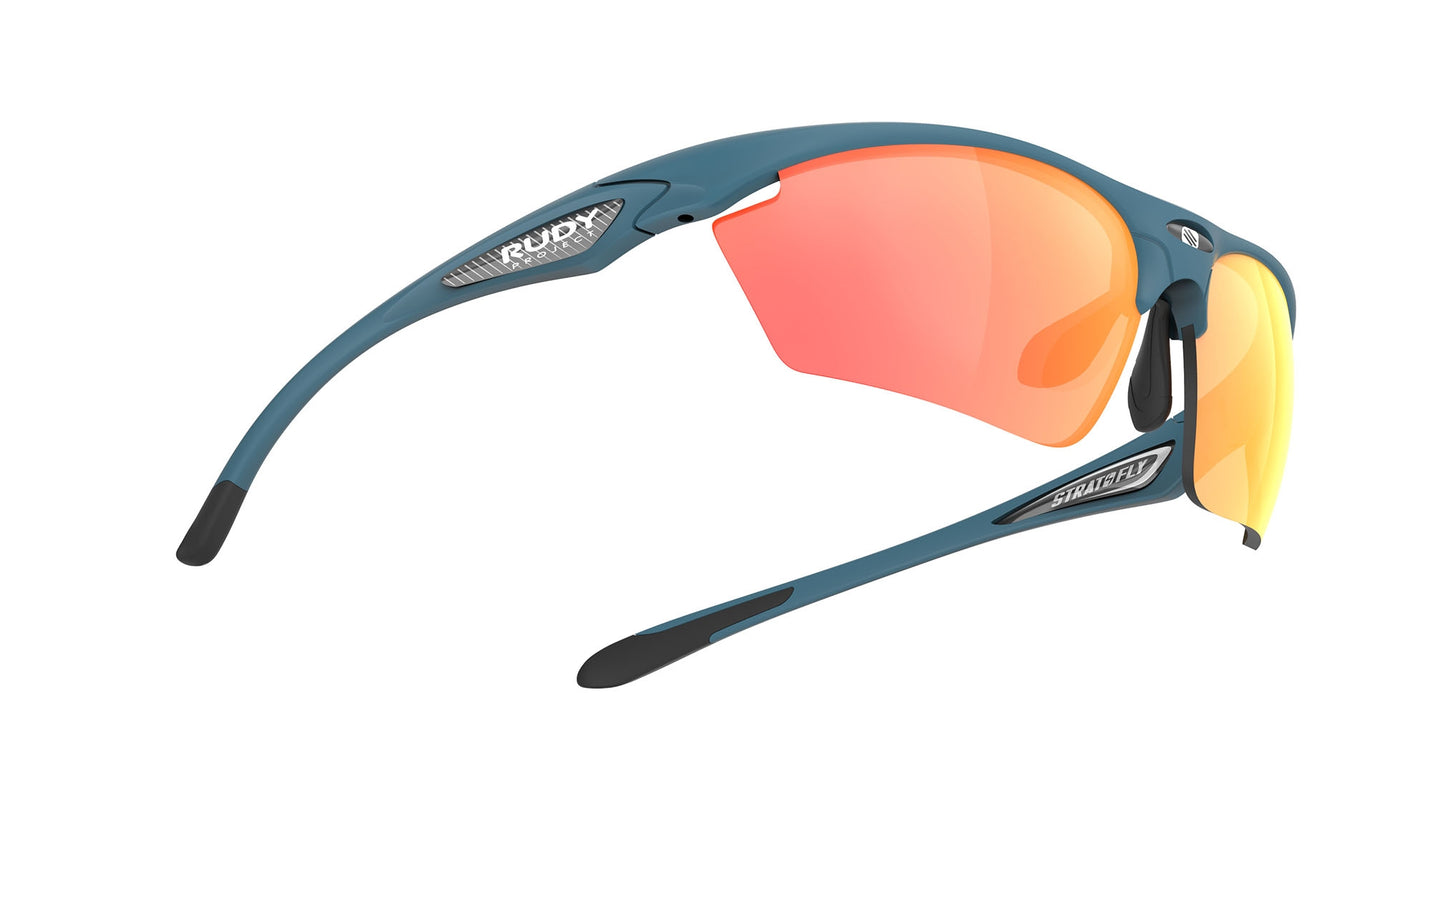 Rudy Project Stratofly Light Teal (Matte) - Rp Optics Multilaser Orange Sunglasses